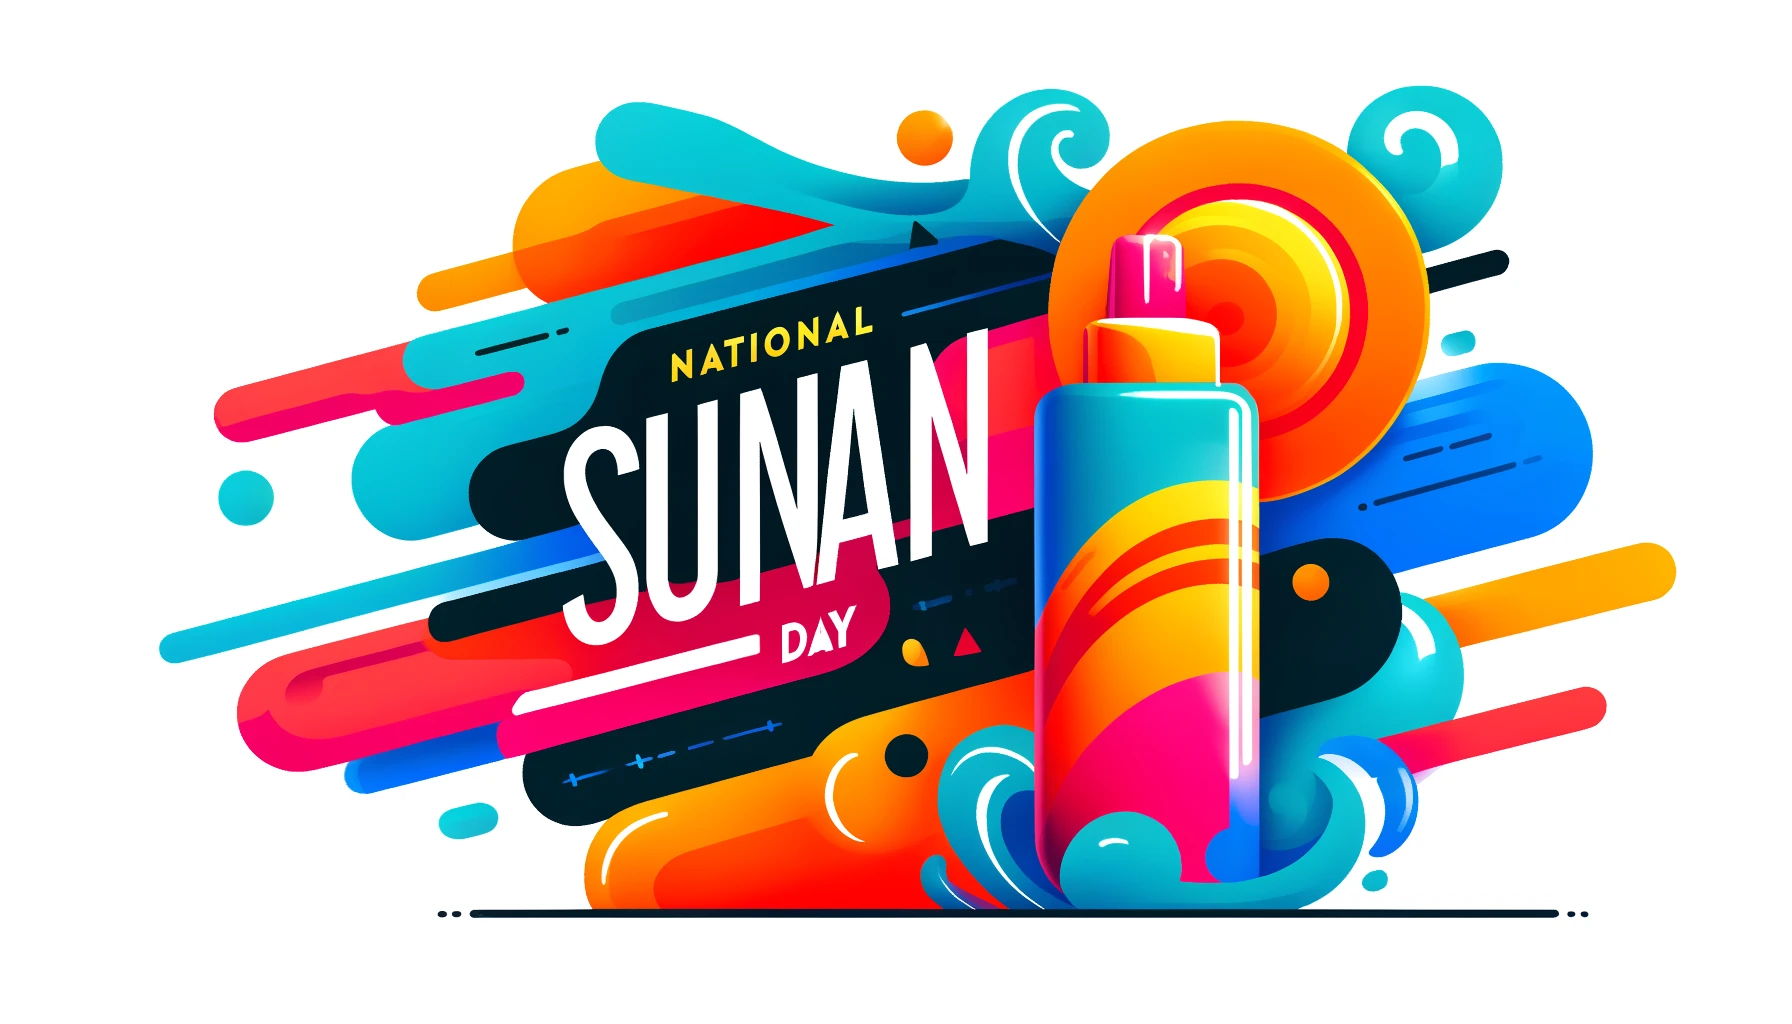 National Sunscreen Day